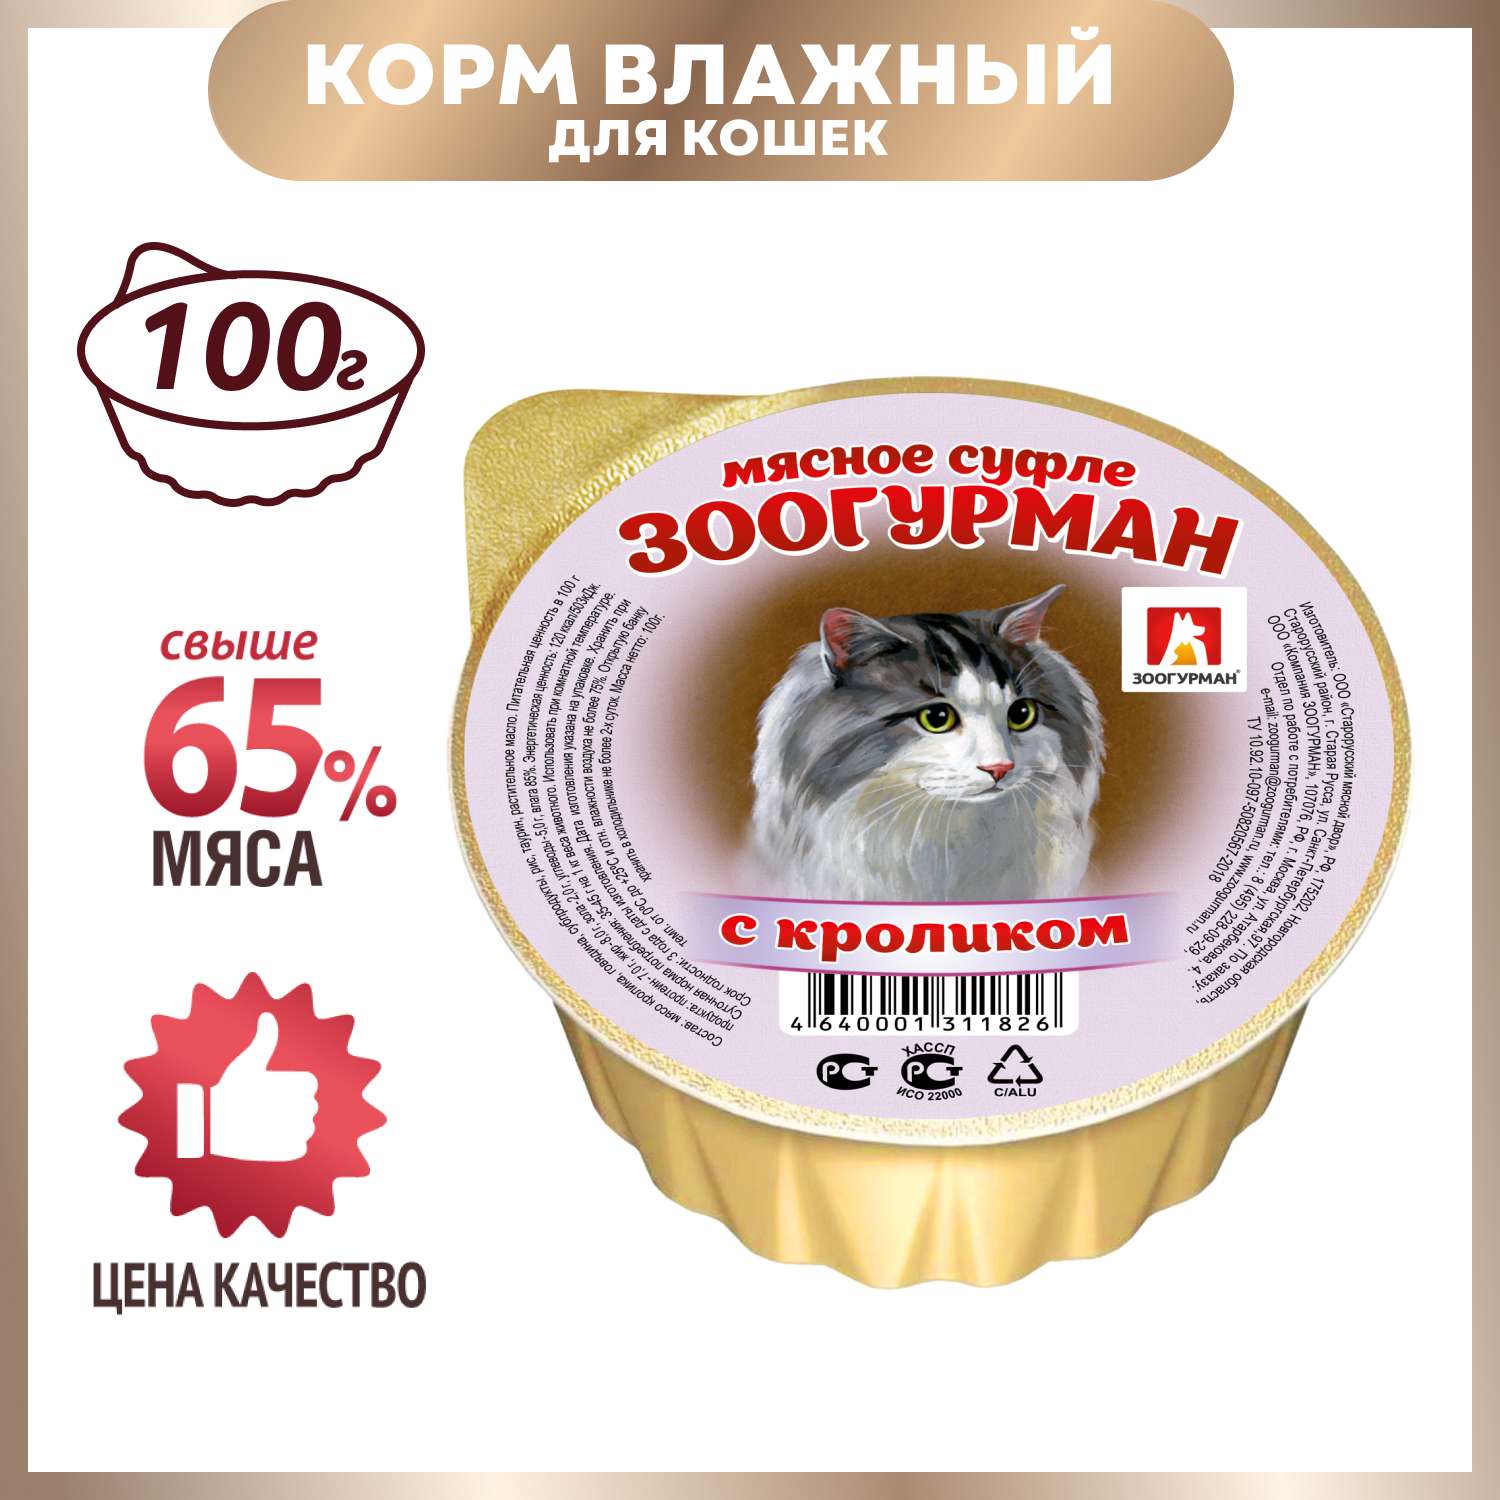 Корм для кошек Зоогурман 100г с кроликом суфле ламистер - фото 1